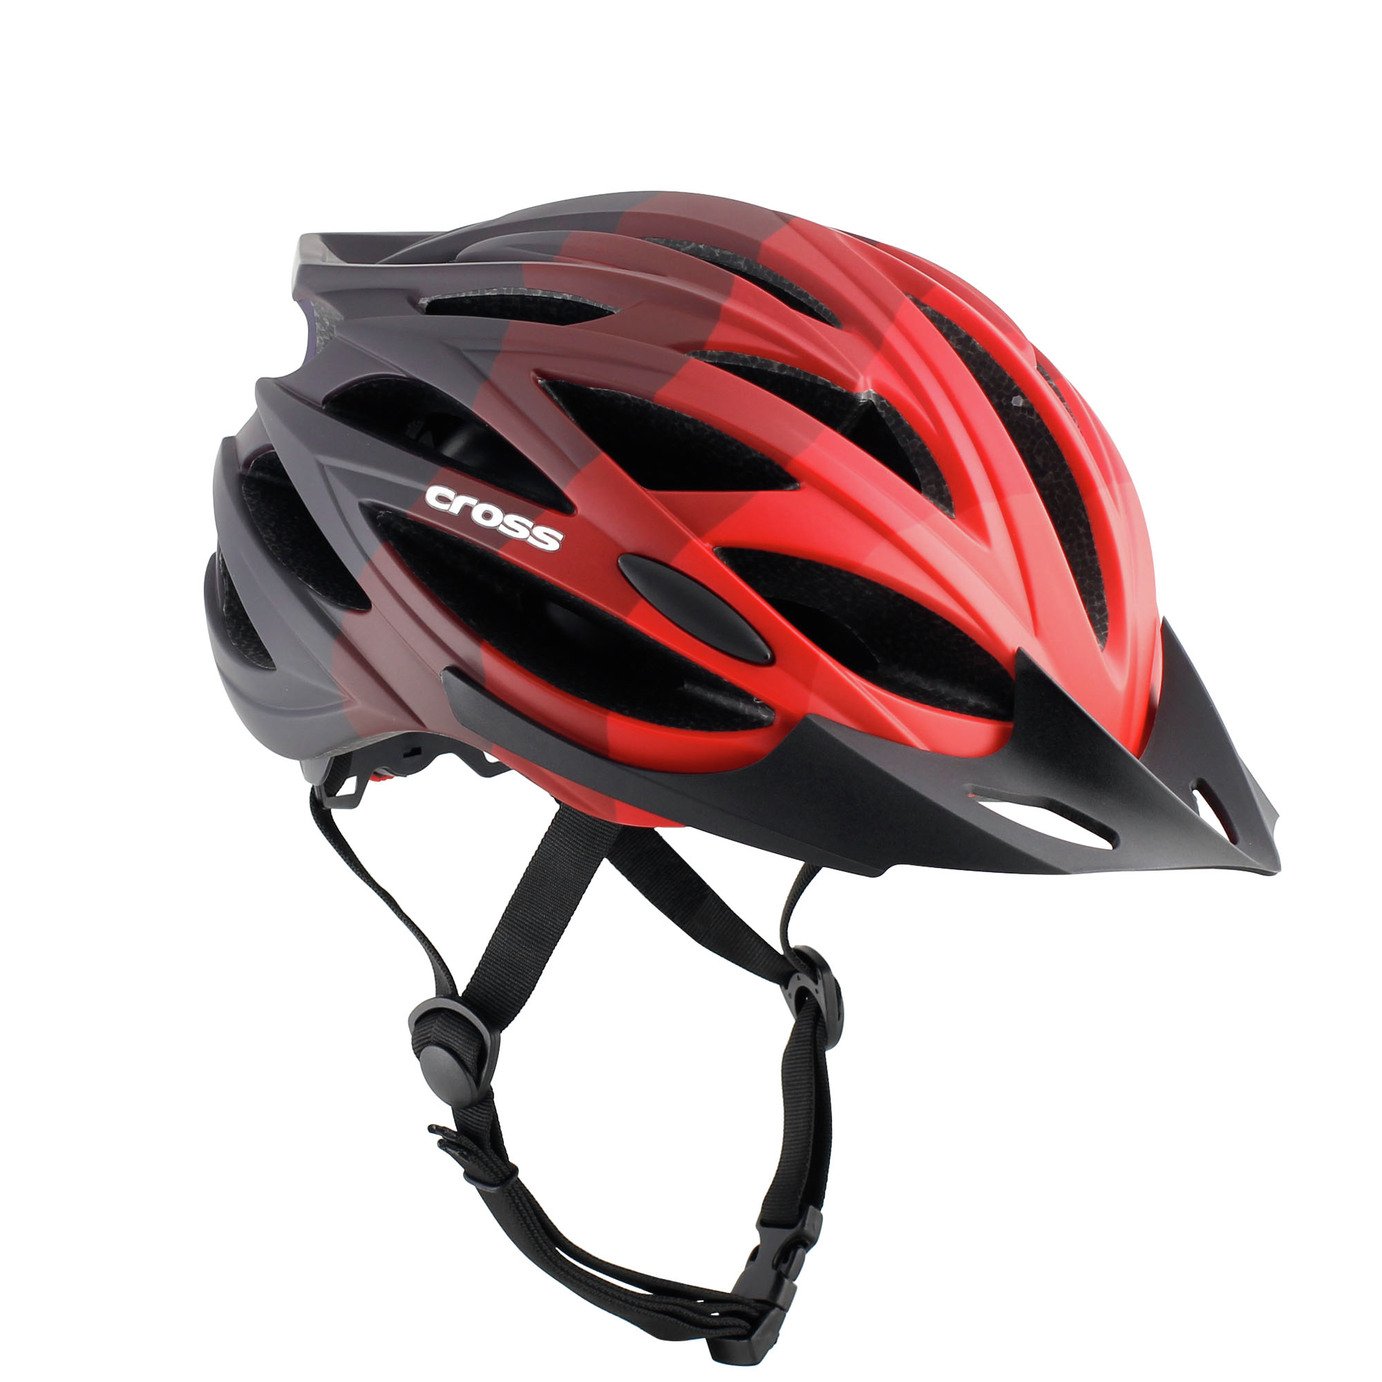 Cross Kids Bike Helmet - Red